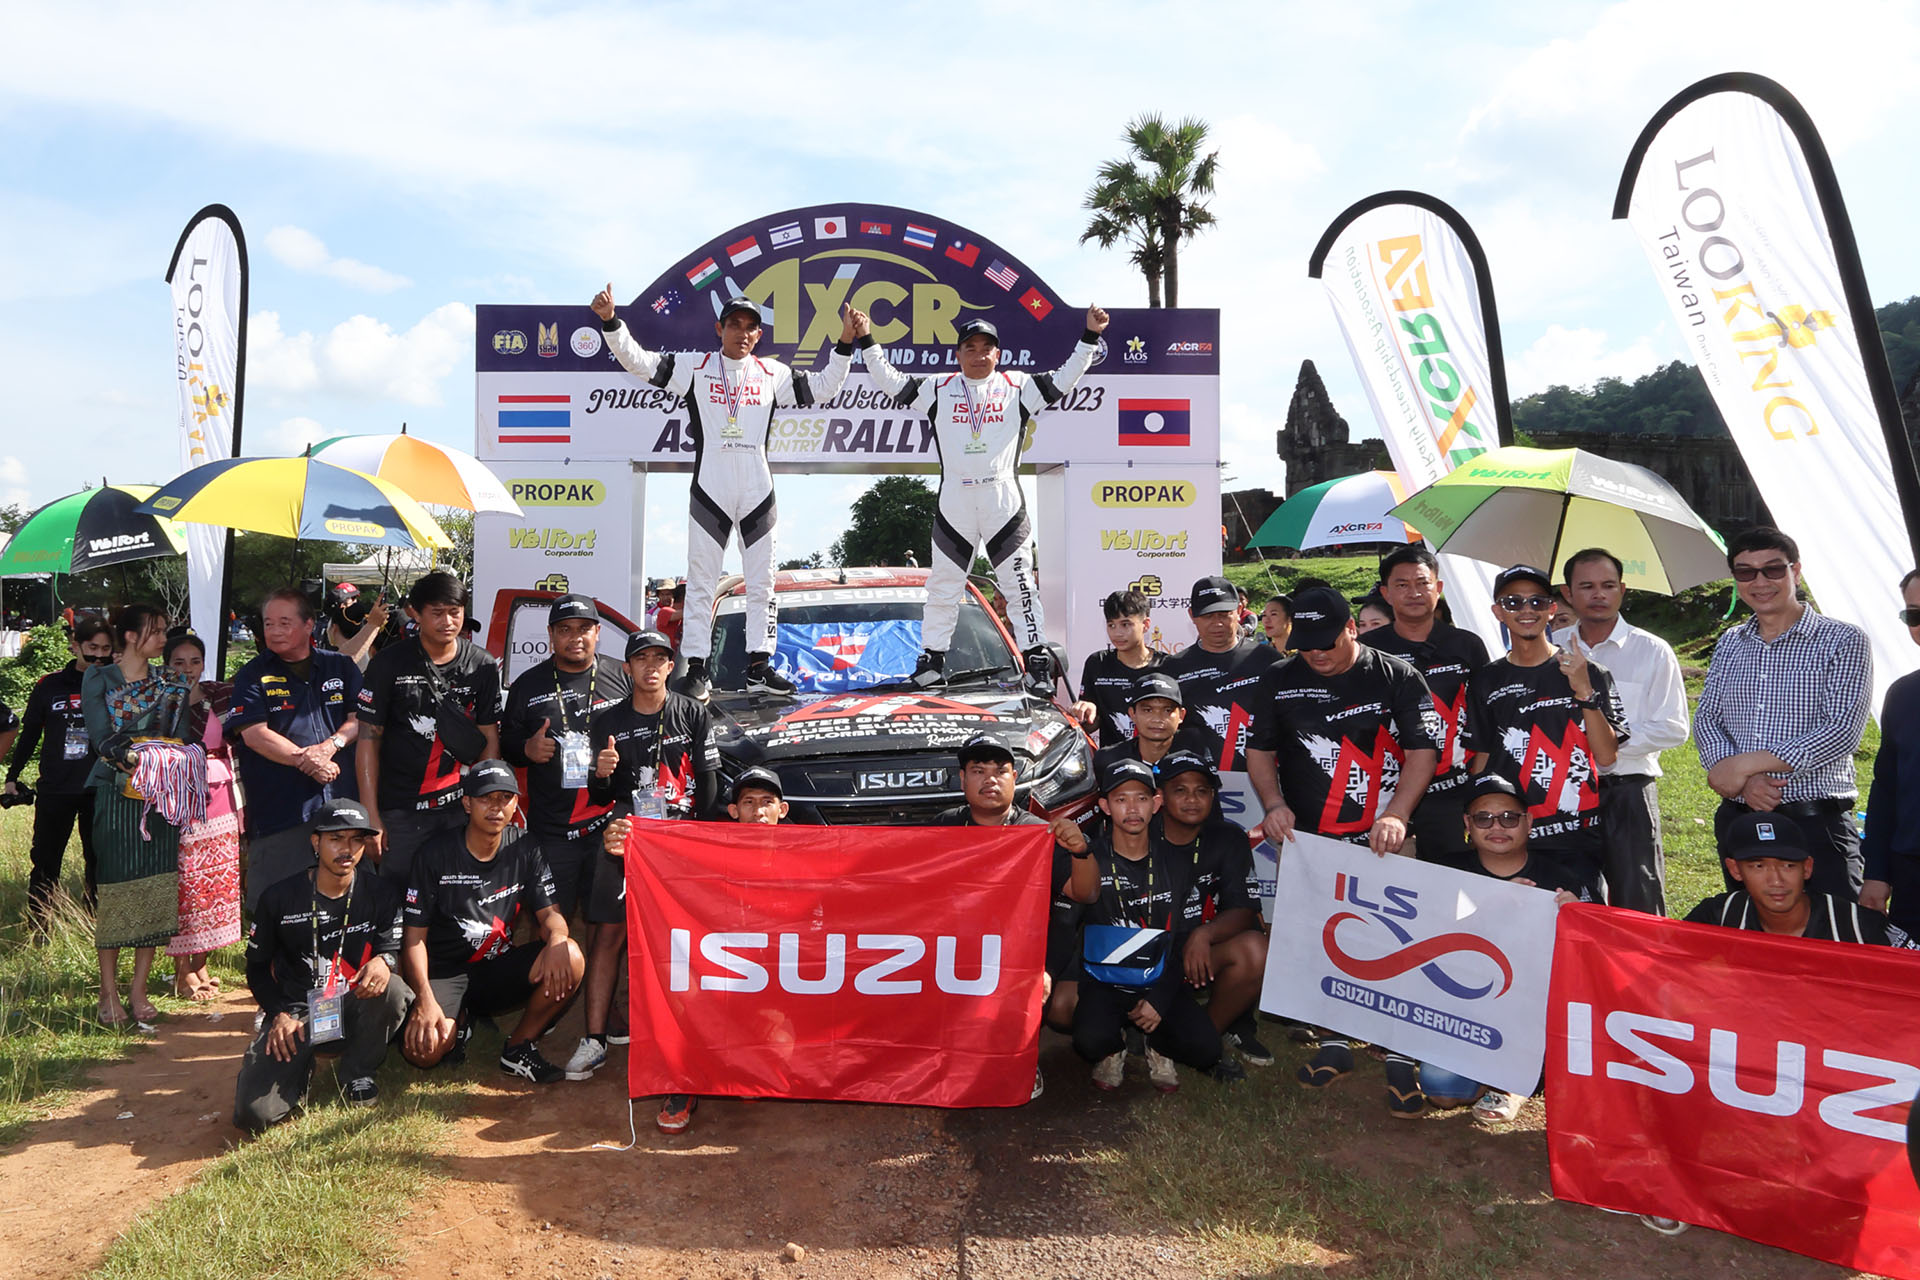 Auto Overall 9th: #115 Ditsapong Maneein / Athikij Srimongkhol (Isuzu Suphan Explorer Liqui Moly Rally Team)